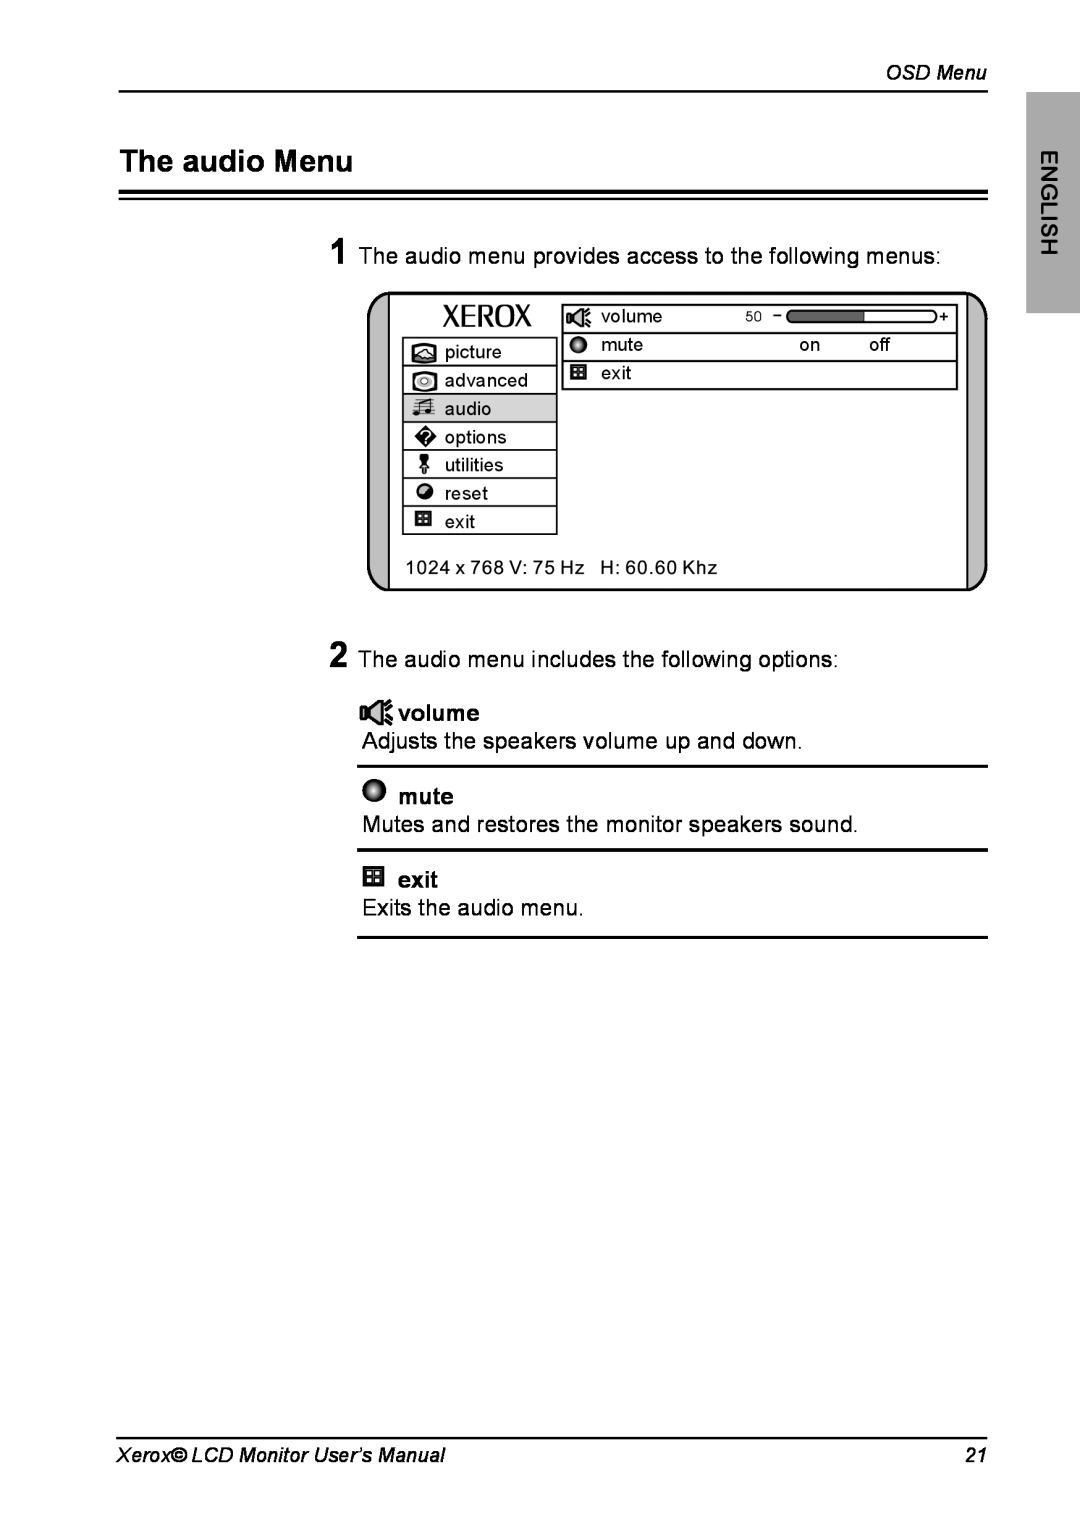 Xerox XM3-19w manual The audio Menu, volume, mute, On Description, exit, English, OSD Menu, Xerox LCD Monitor User’s Manual 